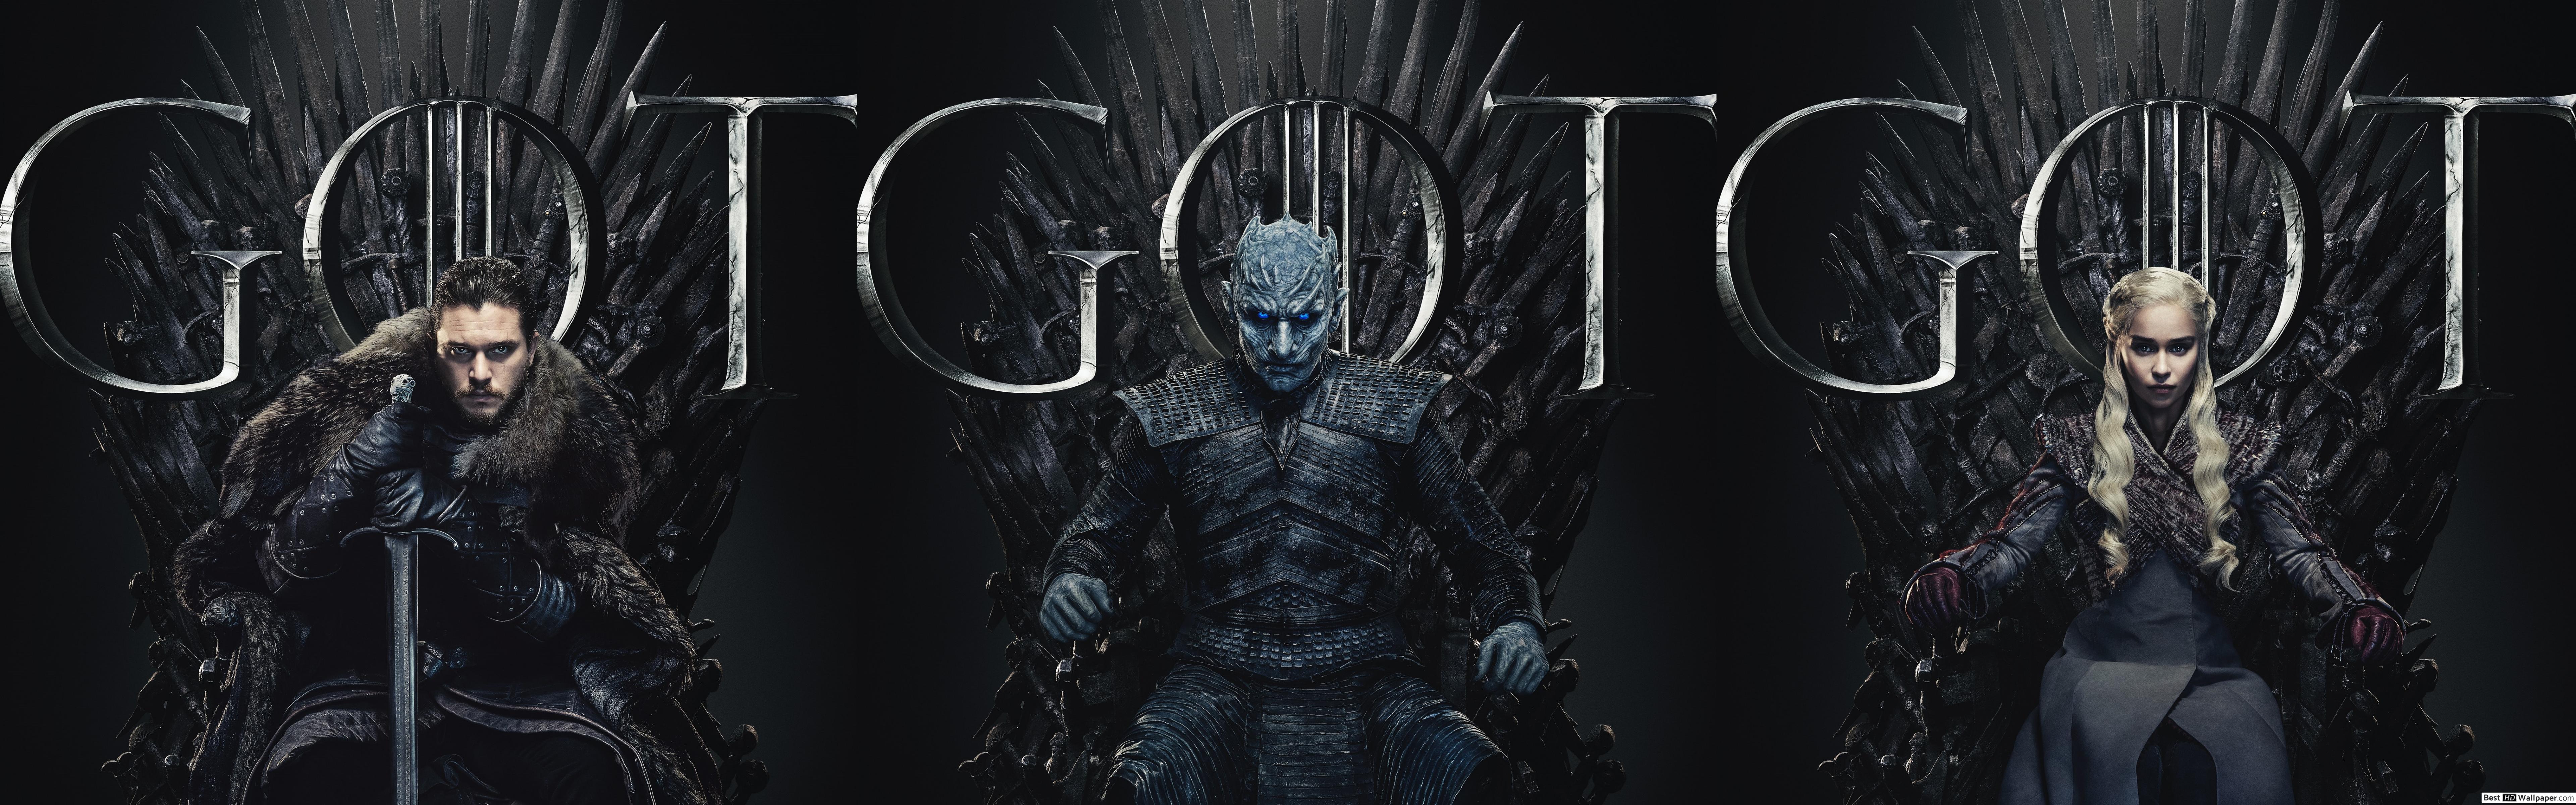 Game of Thrones Season 8 HD wallpaper download